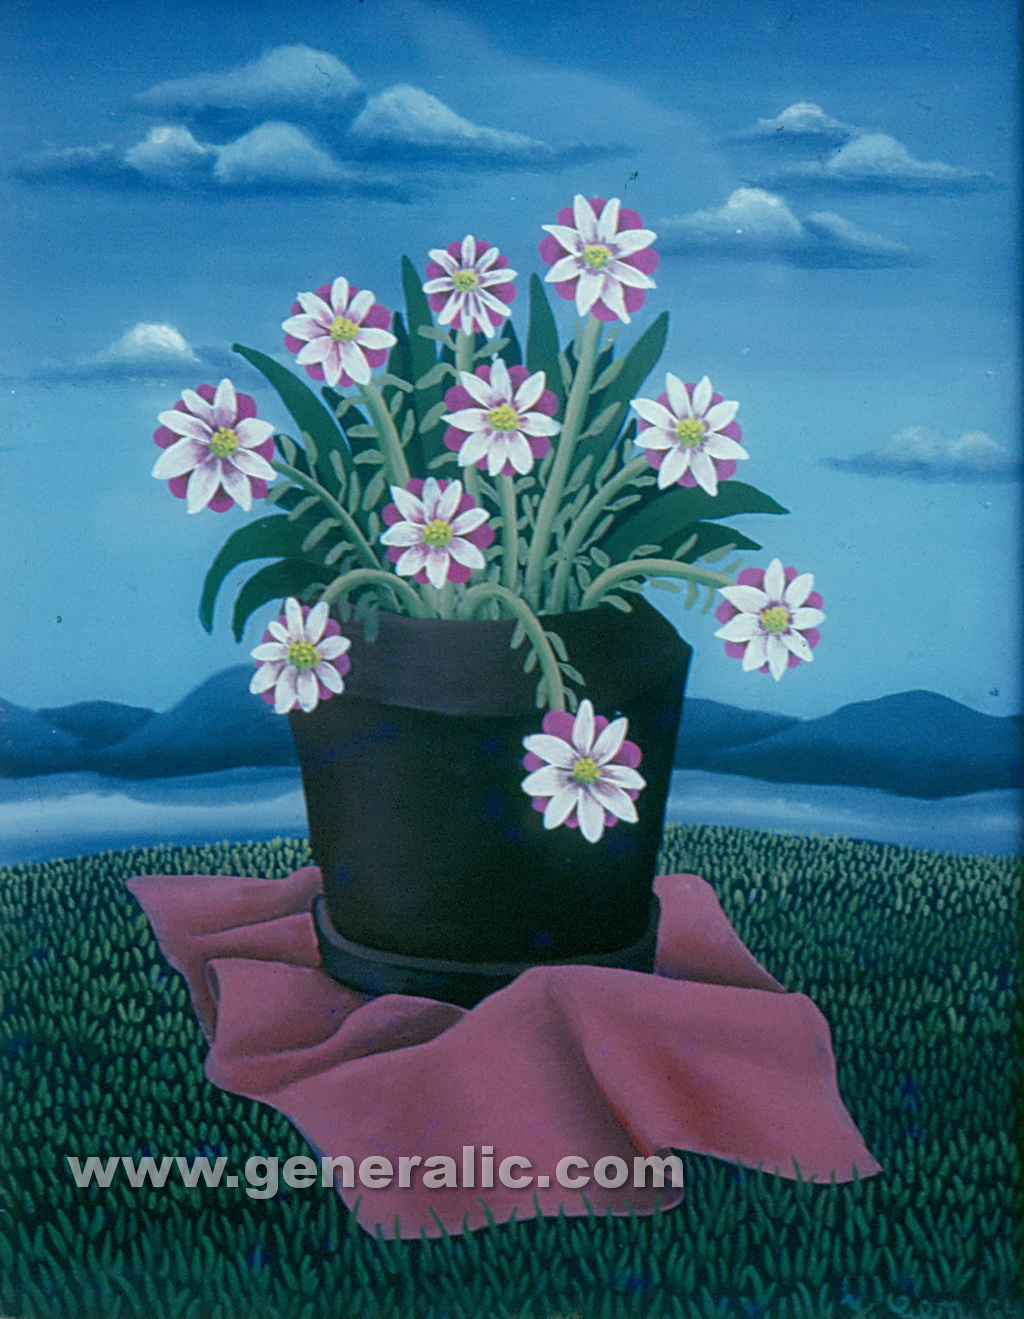 Josip Generalic, 1964, Flowers on a pink blanket, oil on canvas